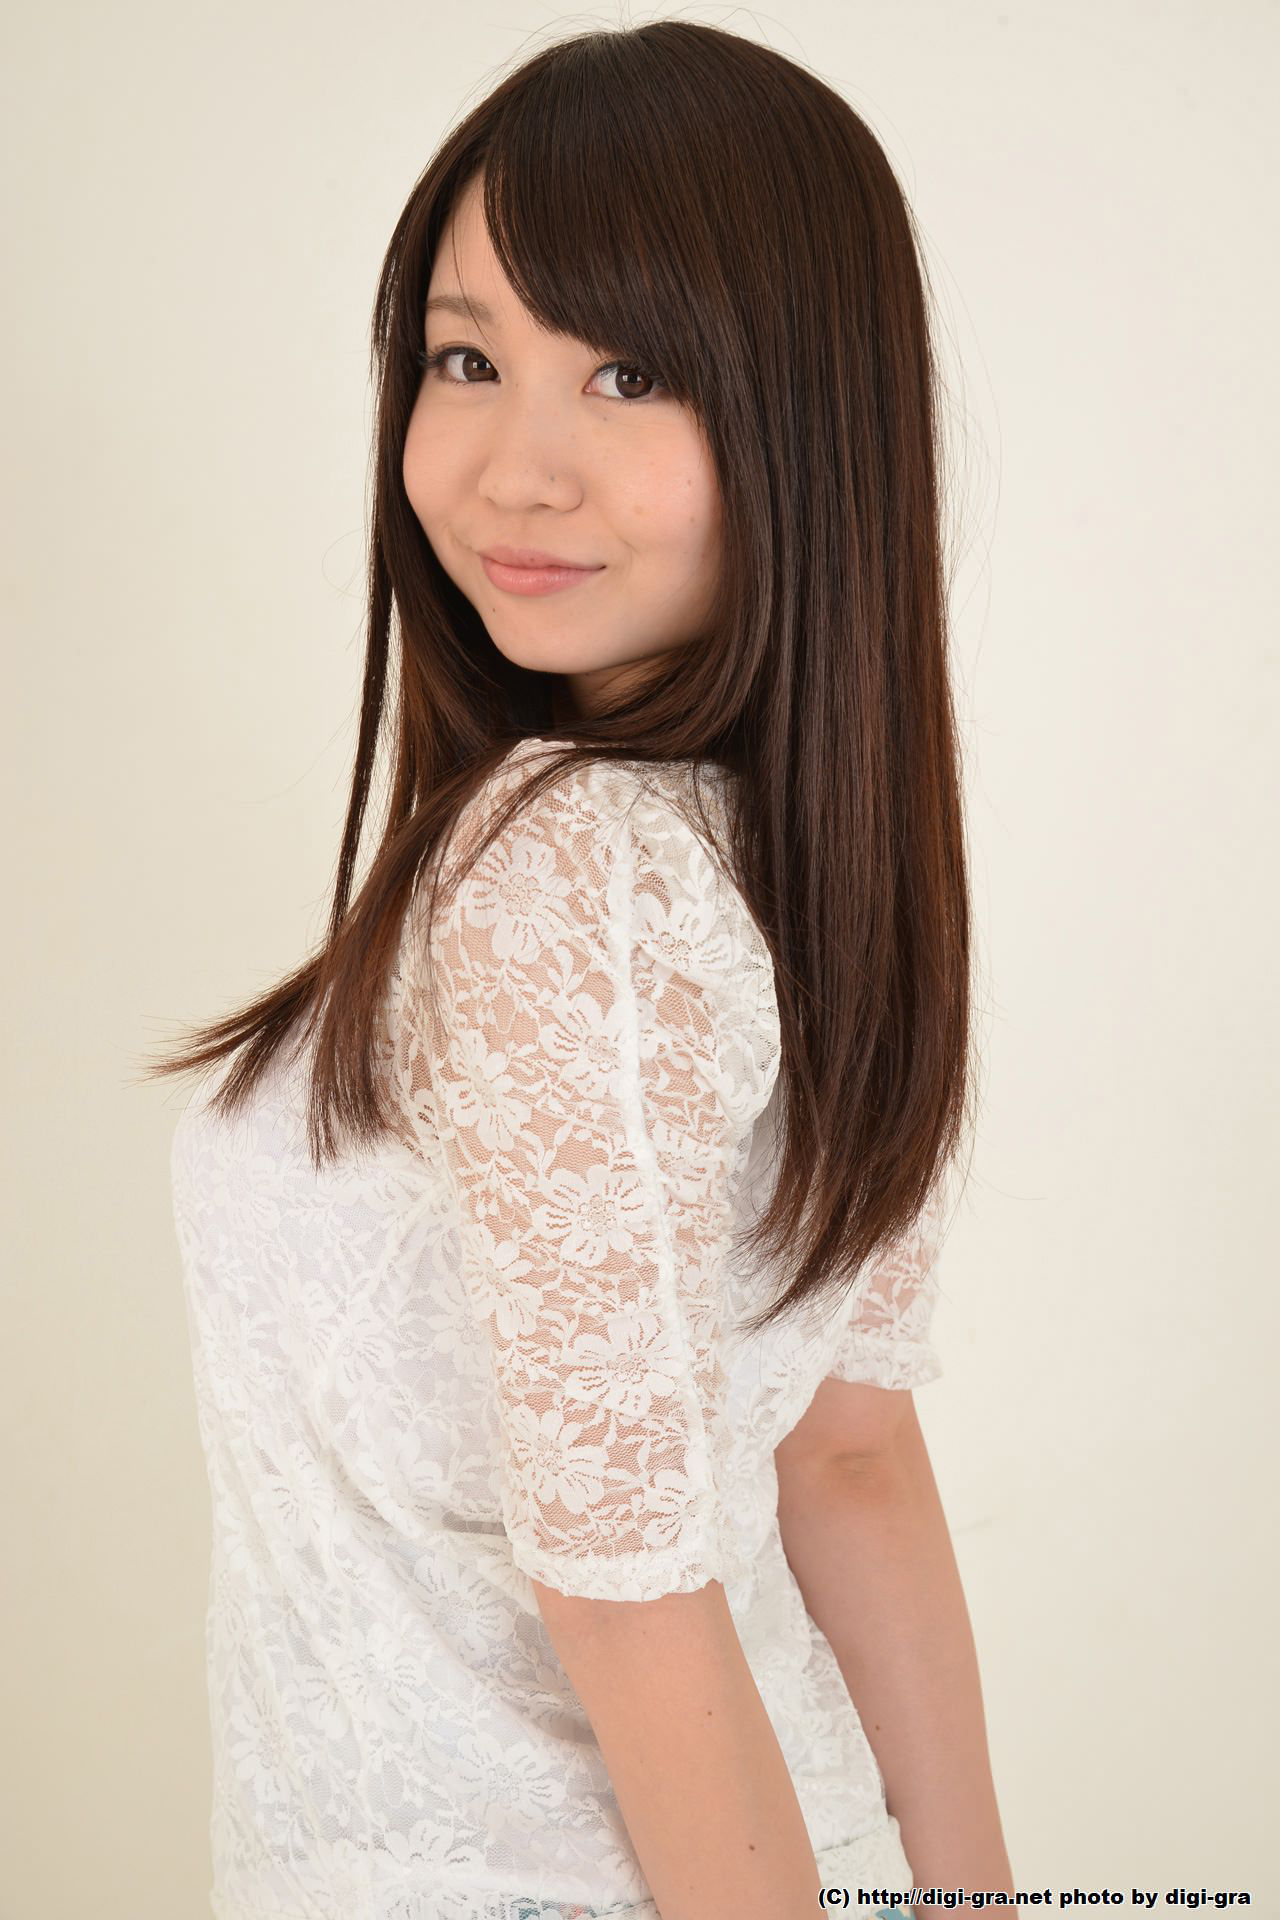 Japanese Long Hair Looking Sideways Looking At Viewer Smiling White Blouse Standing Portrait Display 1280x1920